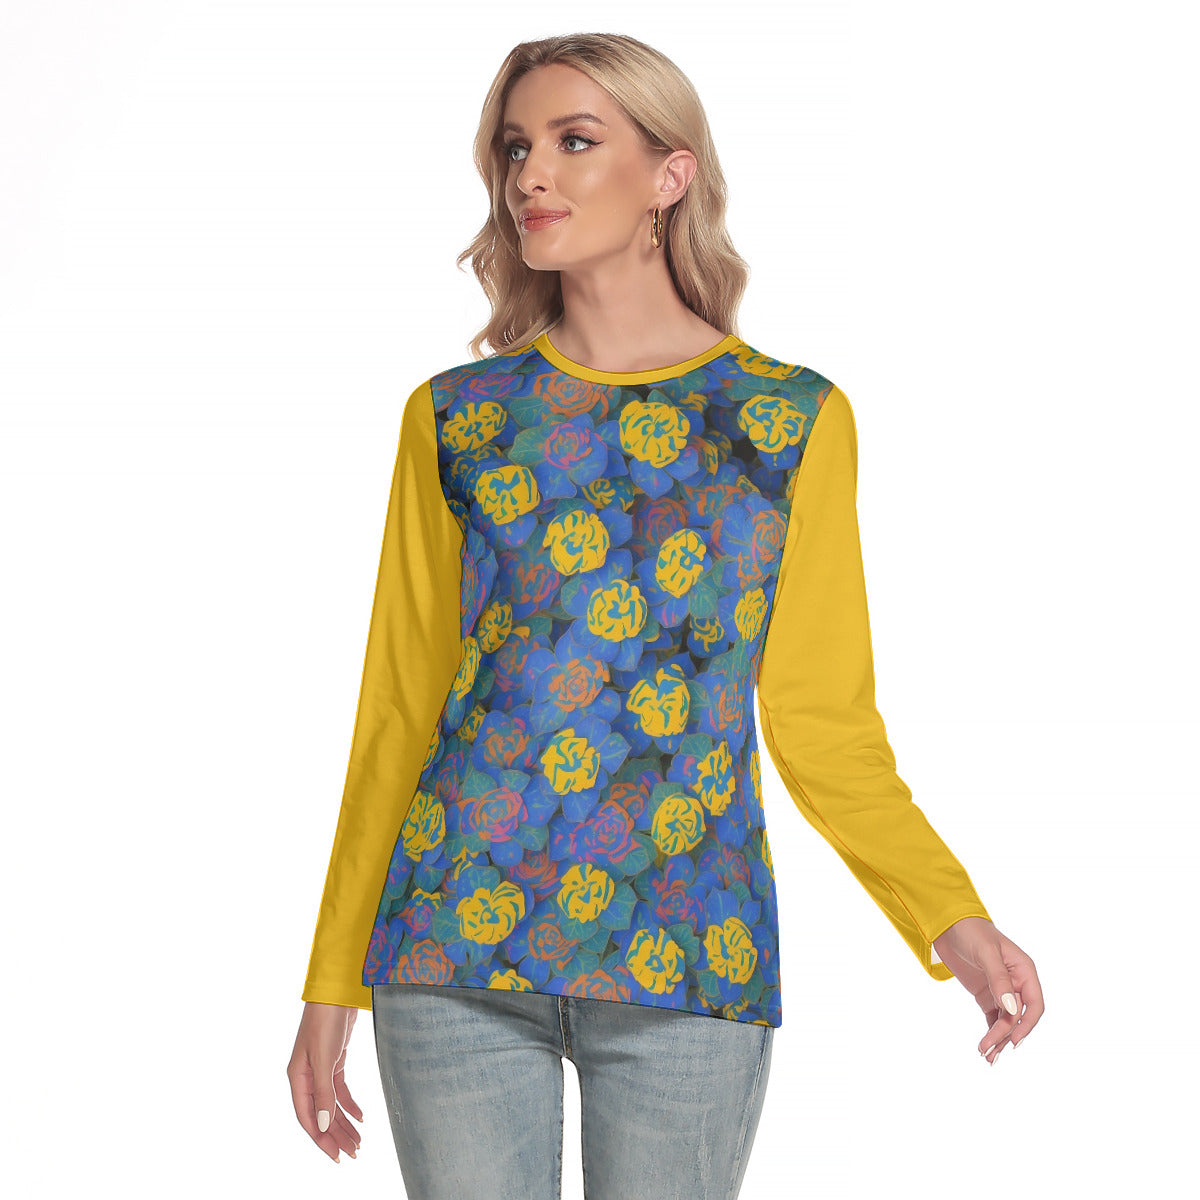 Fantacy Flowers 101 -- Women's O-neck Long Sleeve T-shirt